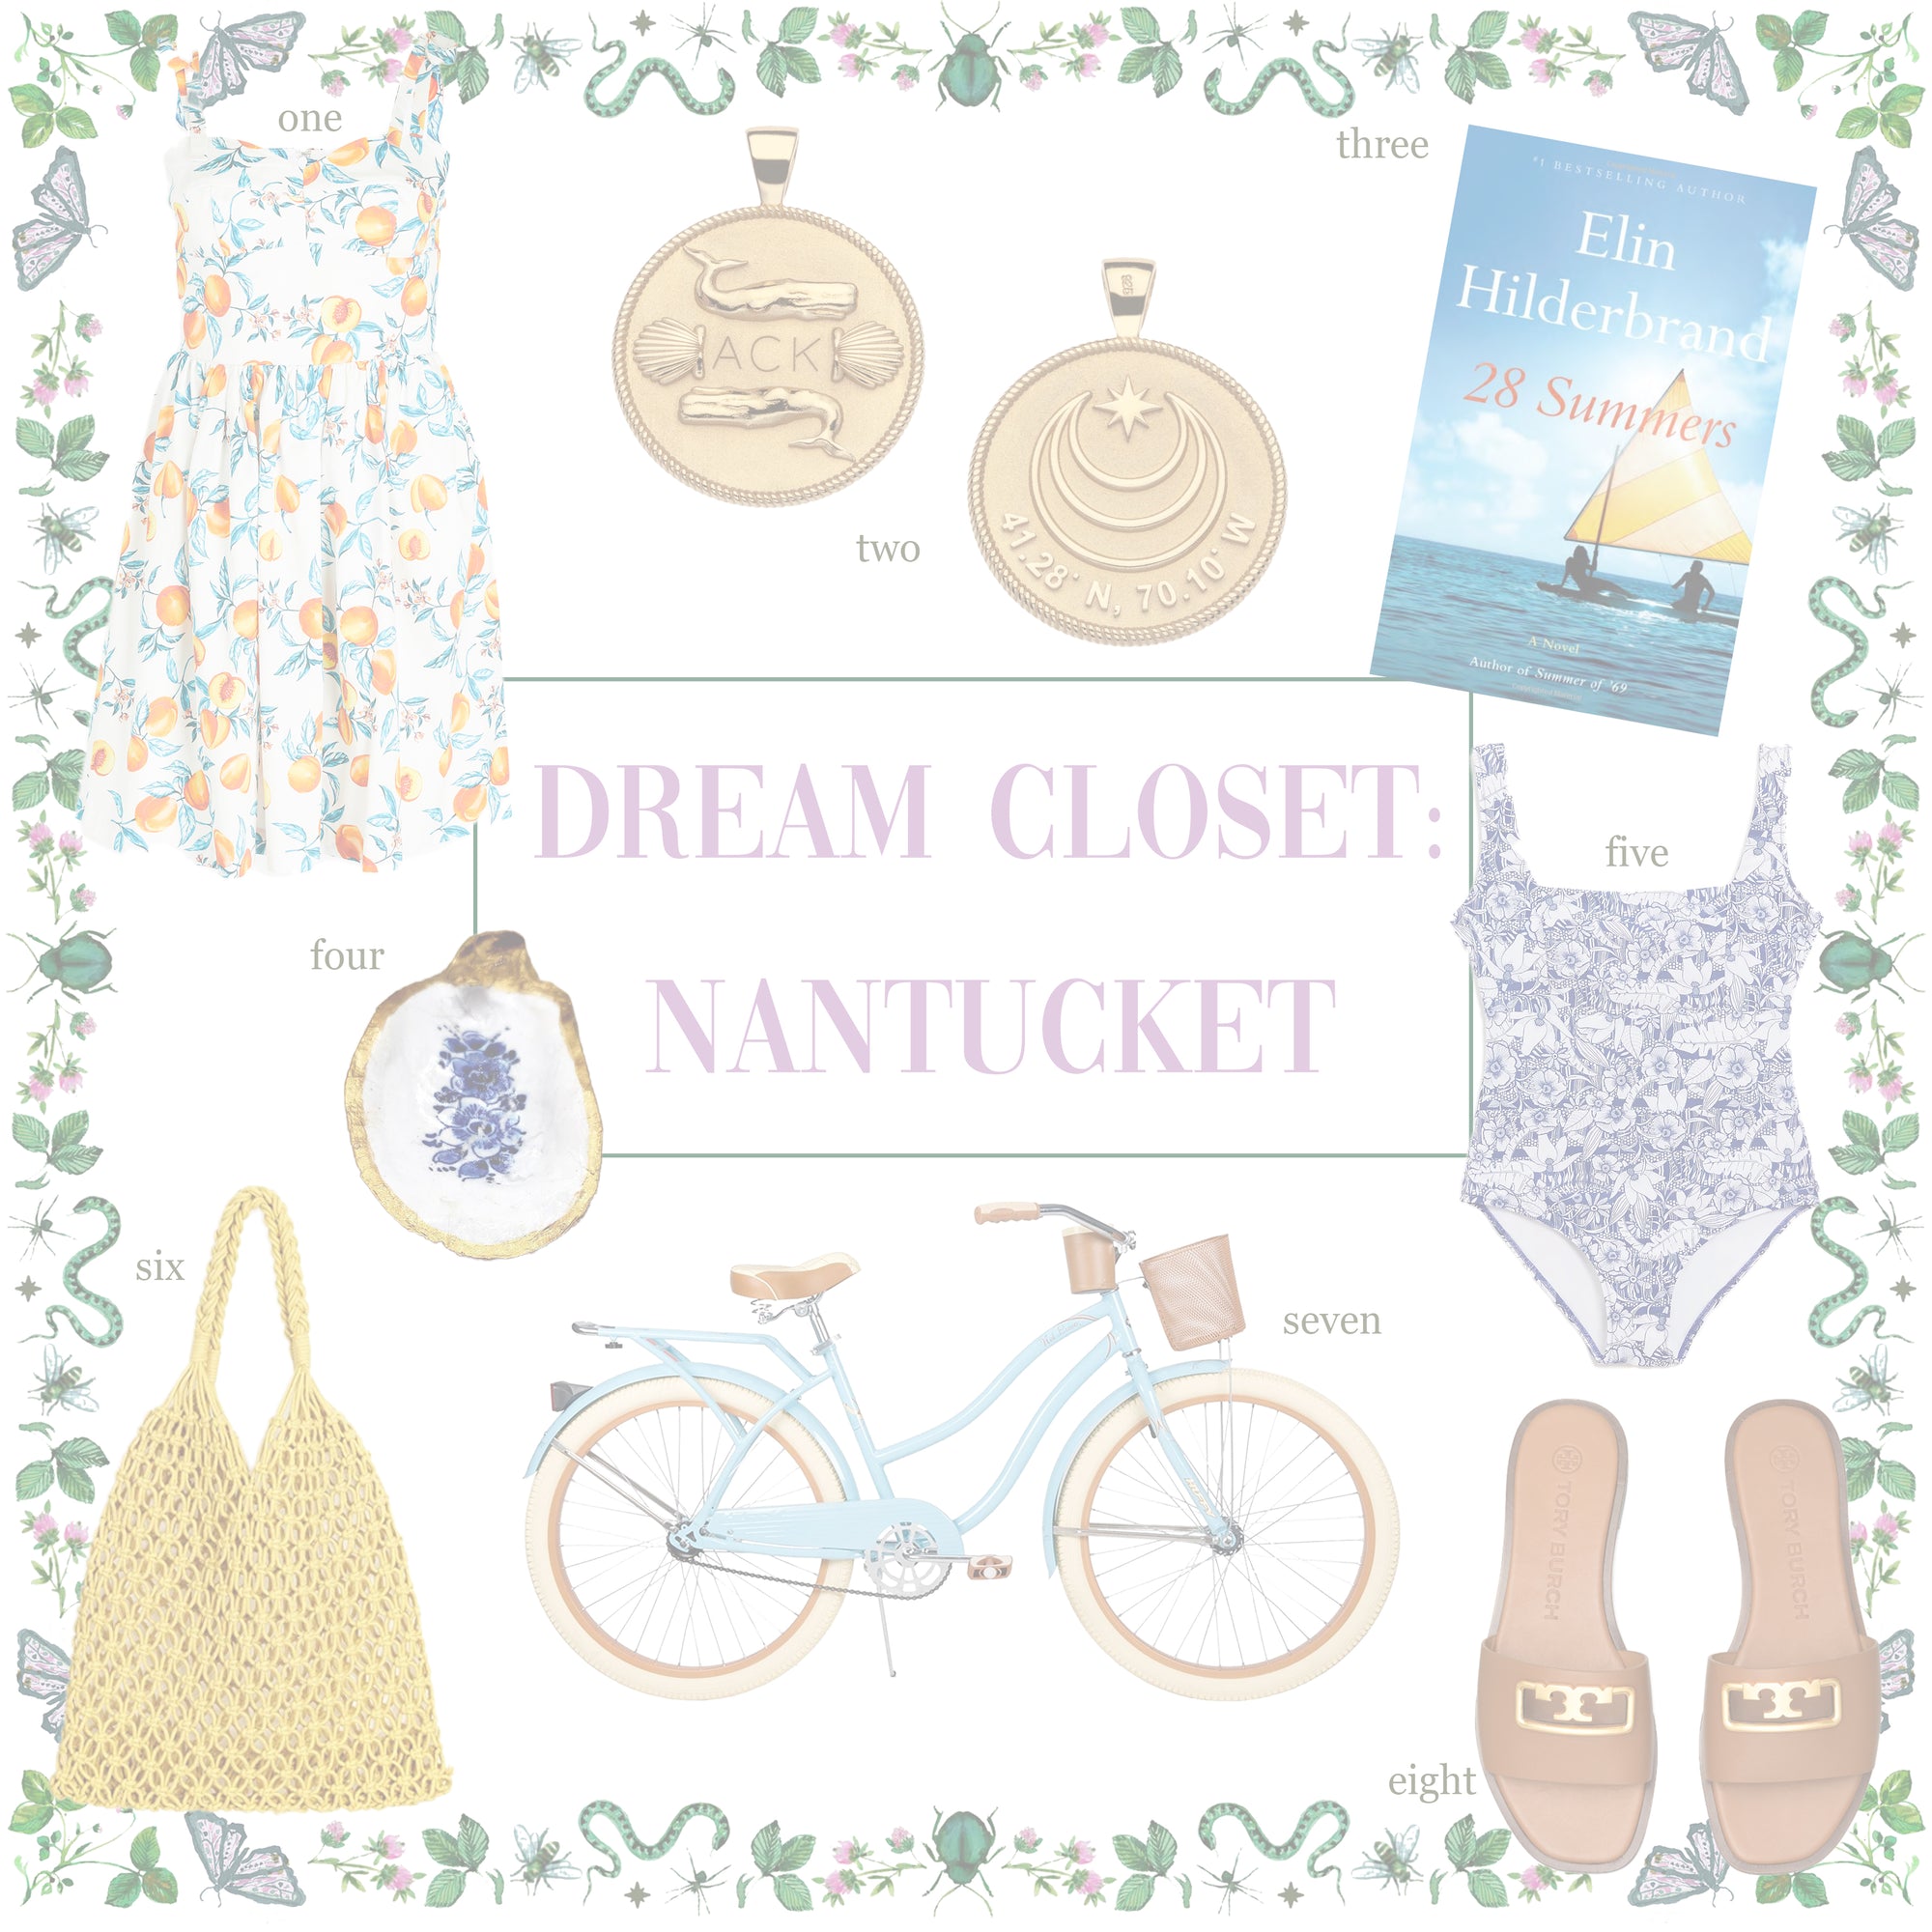 Jane's Dream Closet: Nantucket